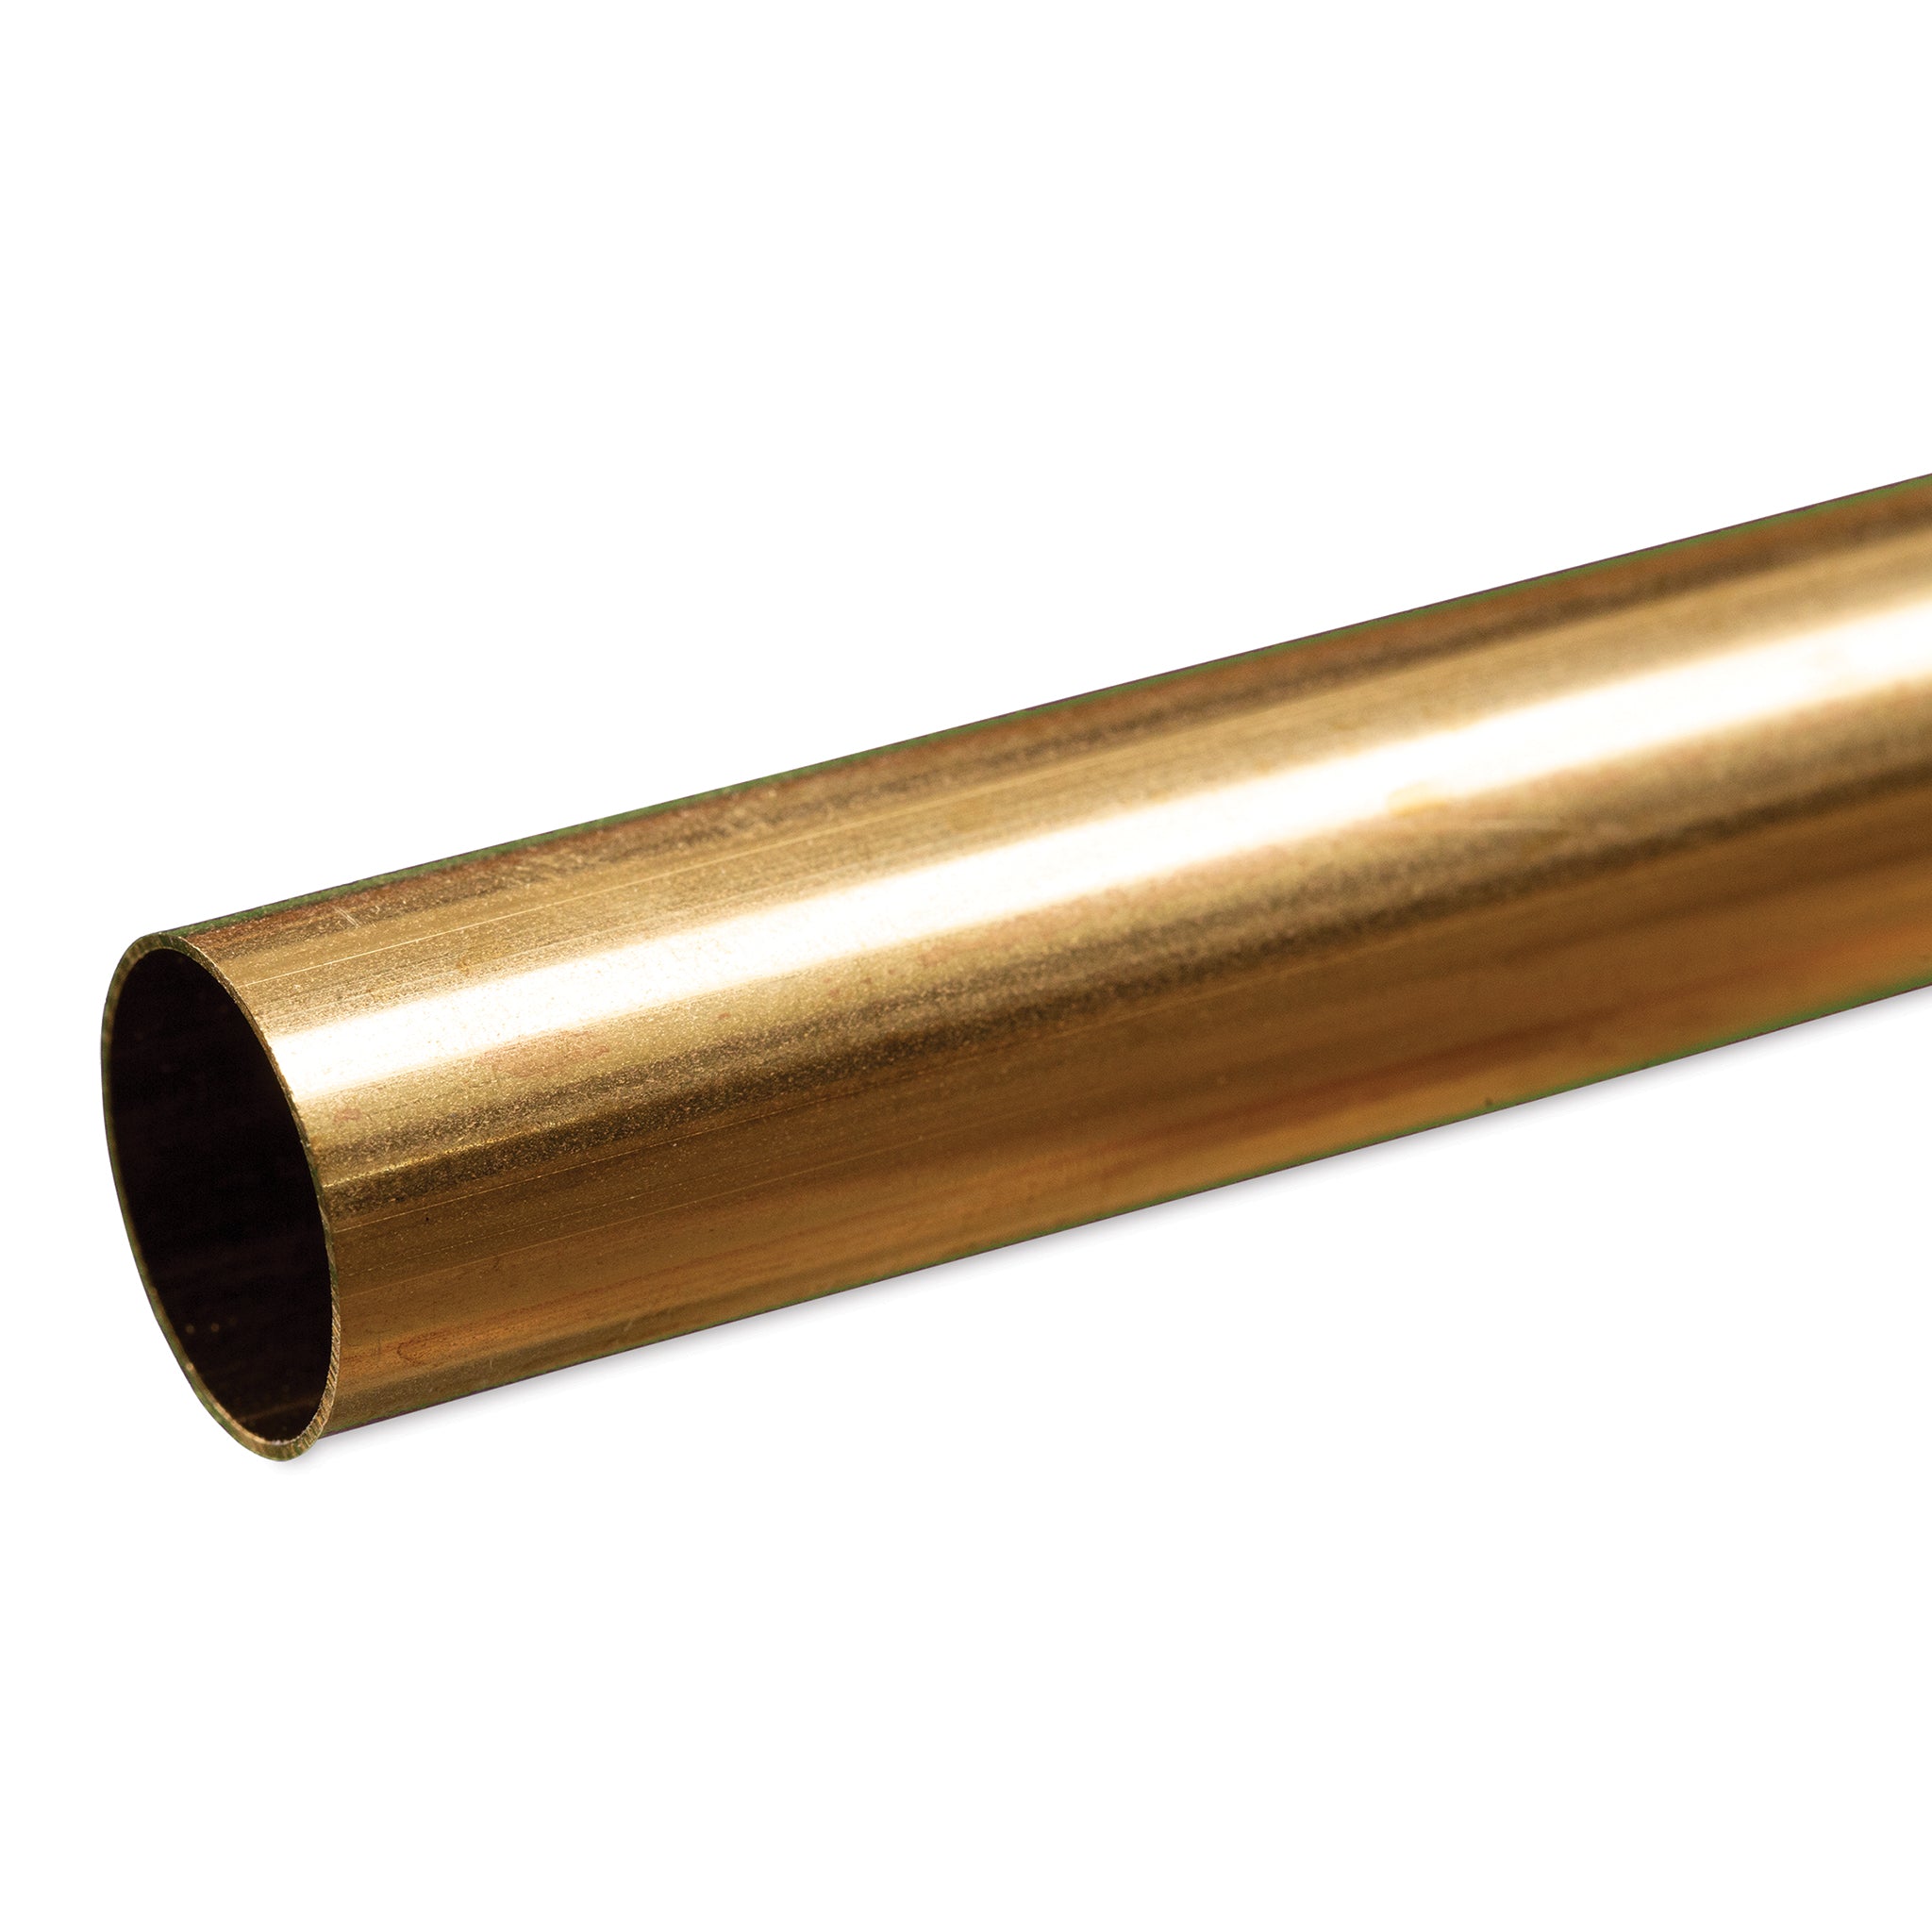 K&S Metals 8143 Round Brass Tube 5/8" OD x 0.014" Wall x 12" Long (1 Piece)